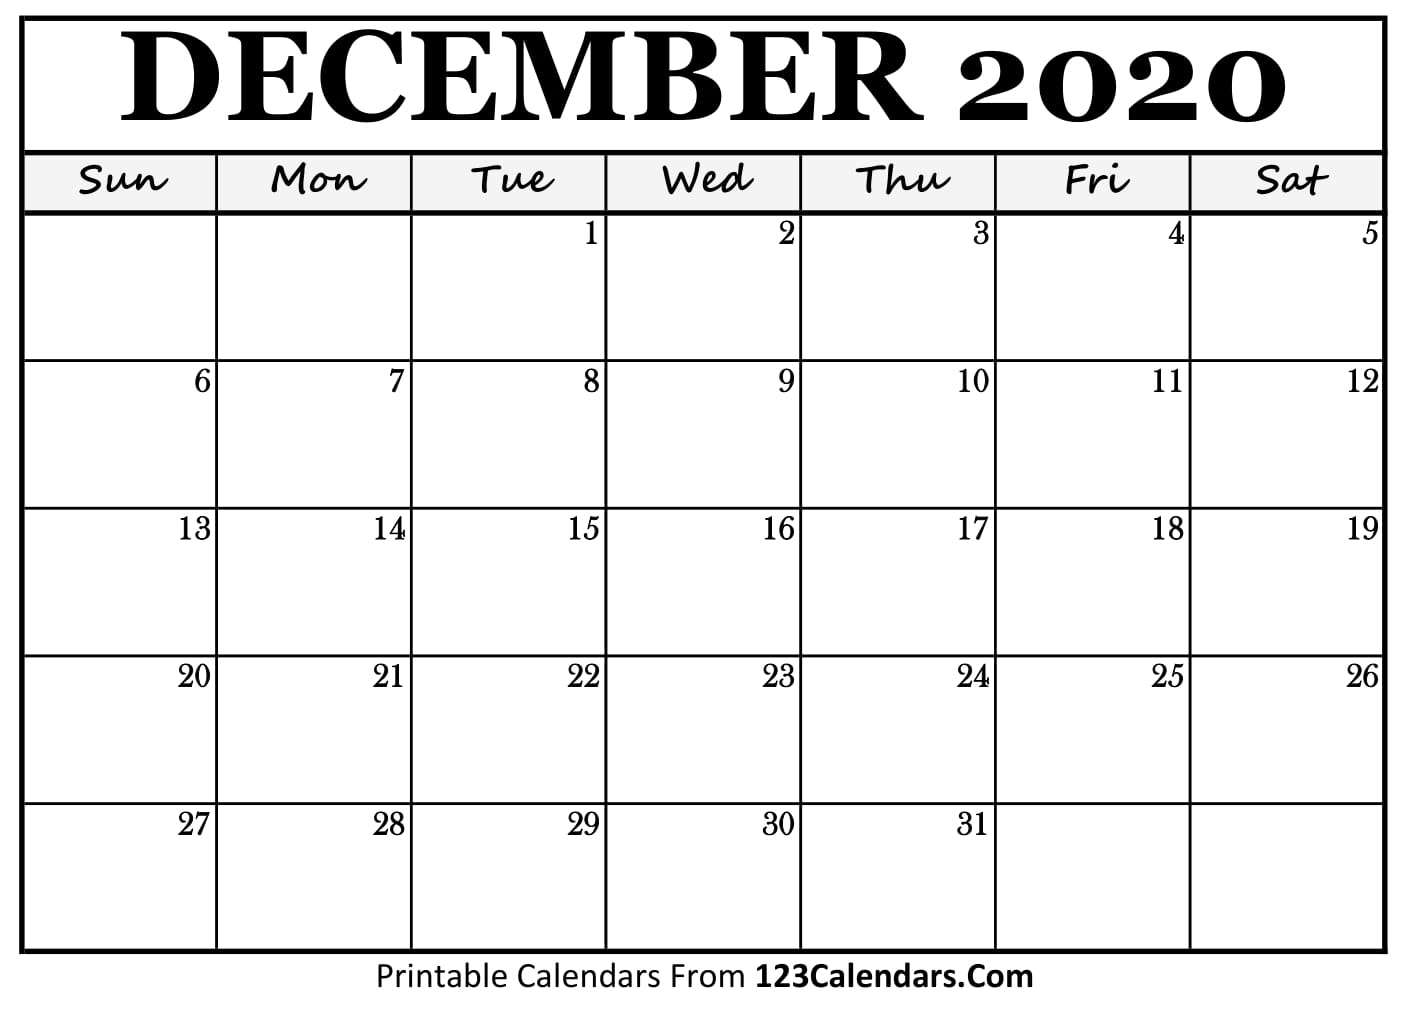 printable-december-2020-calendar-templates-123calendars